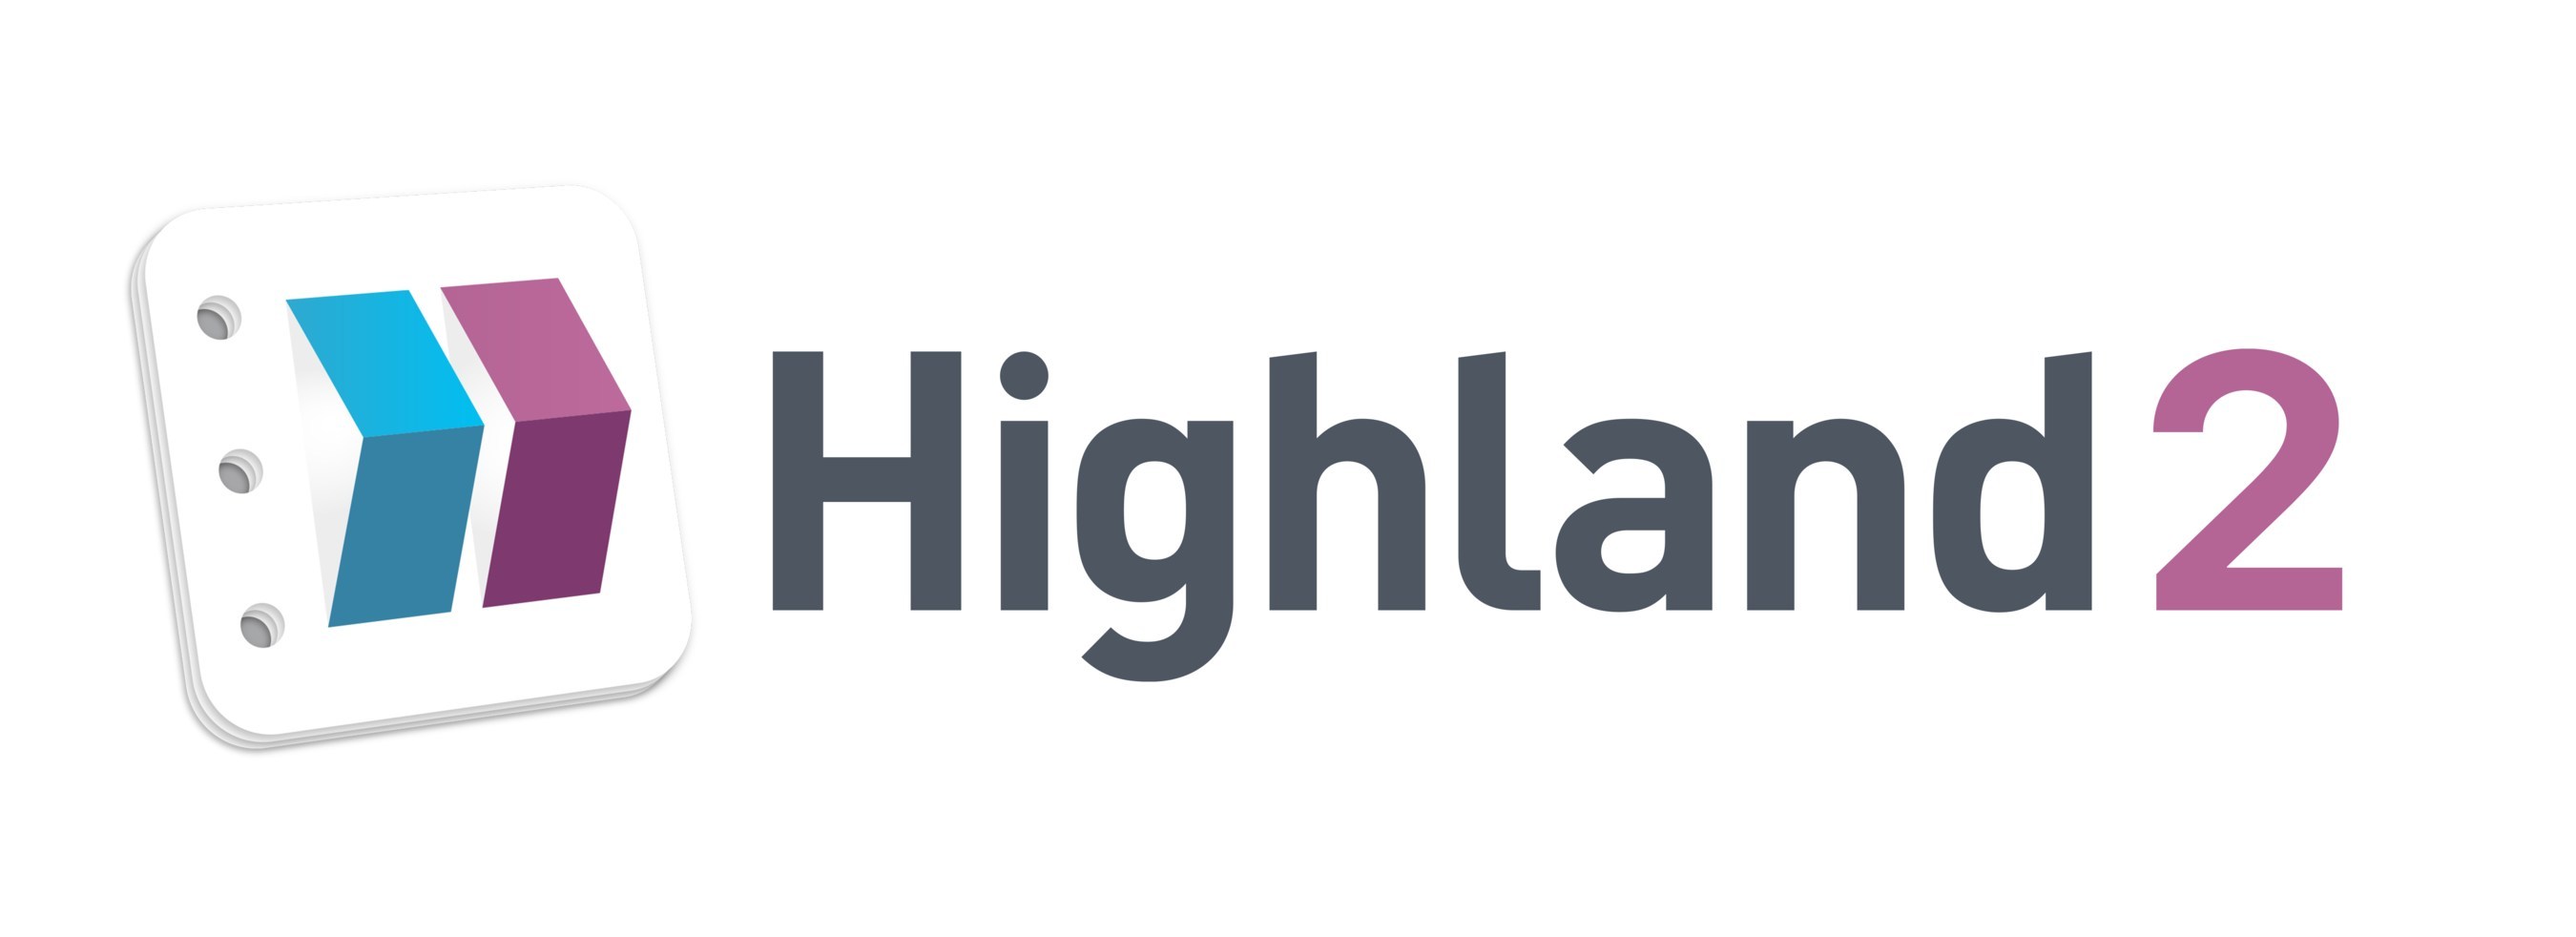 Highland 2